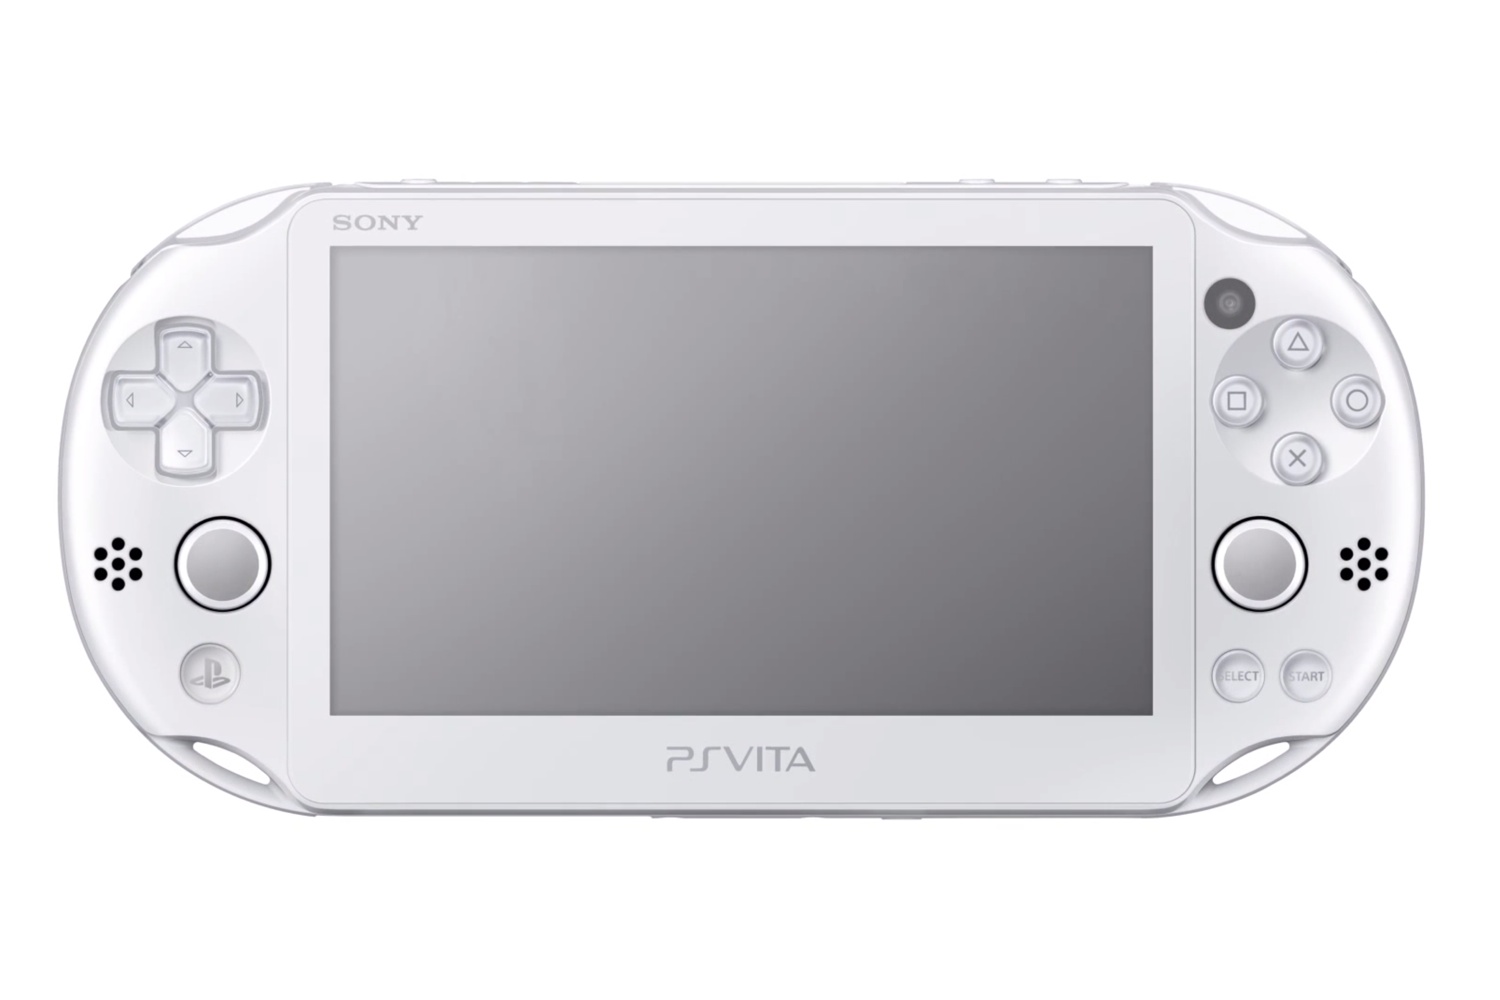 Sony's 'Casual' PS Vita Impresses, but the Vita TV Box Heralds 